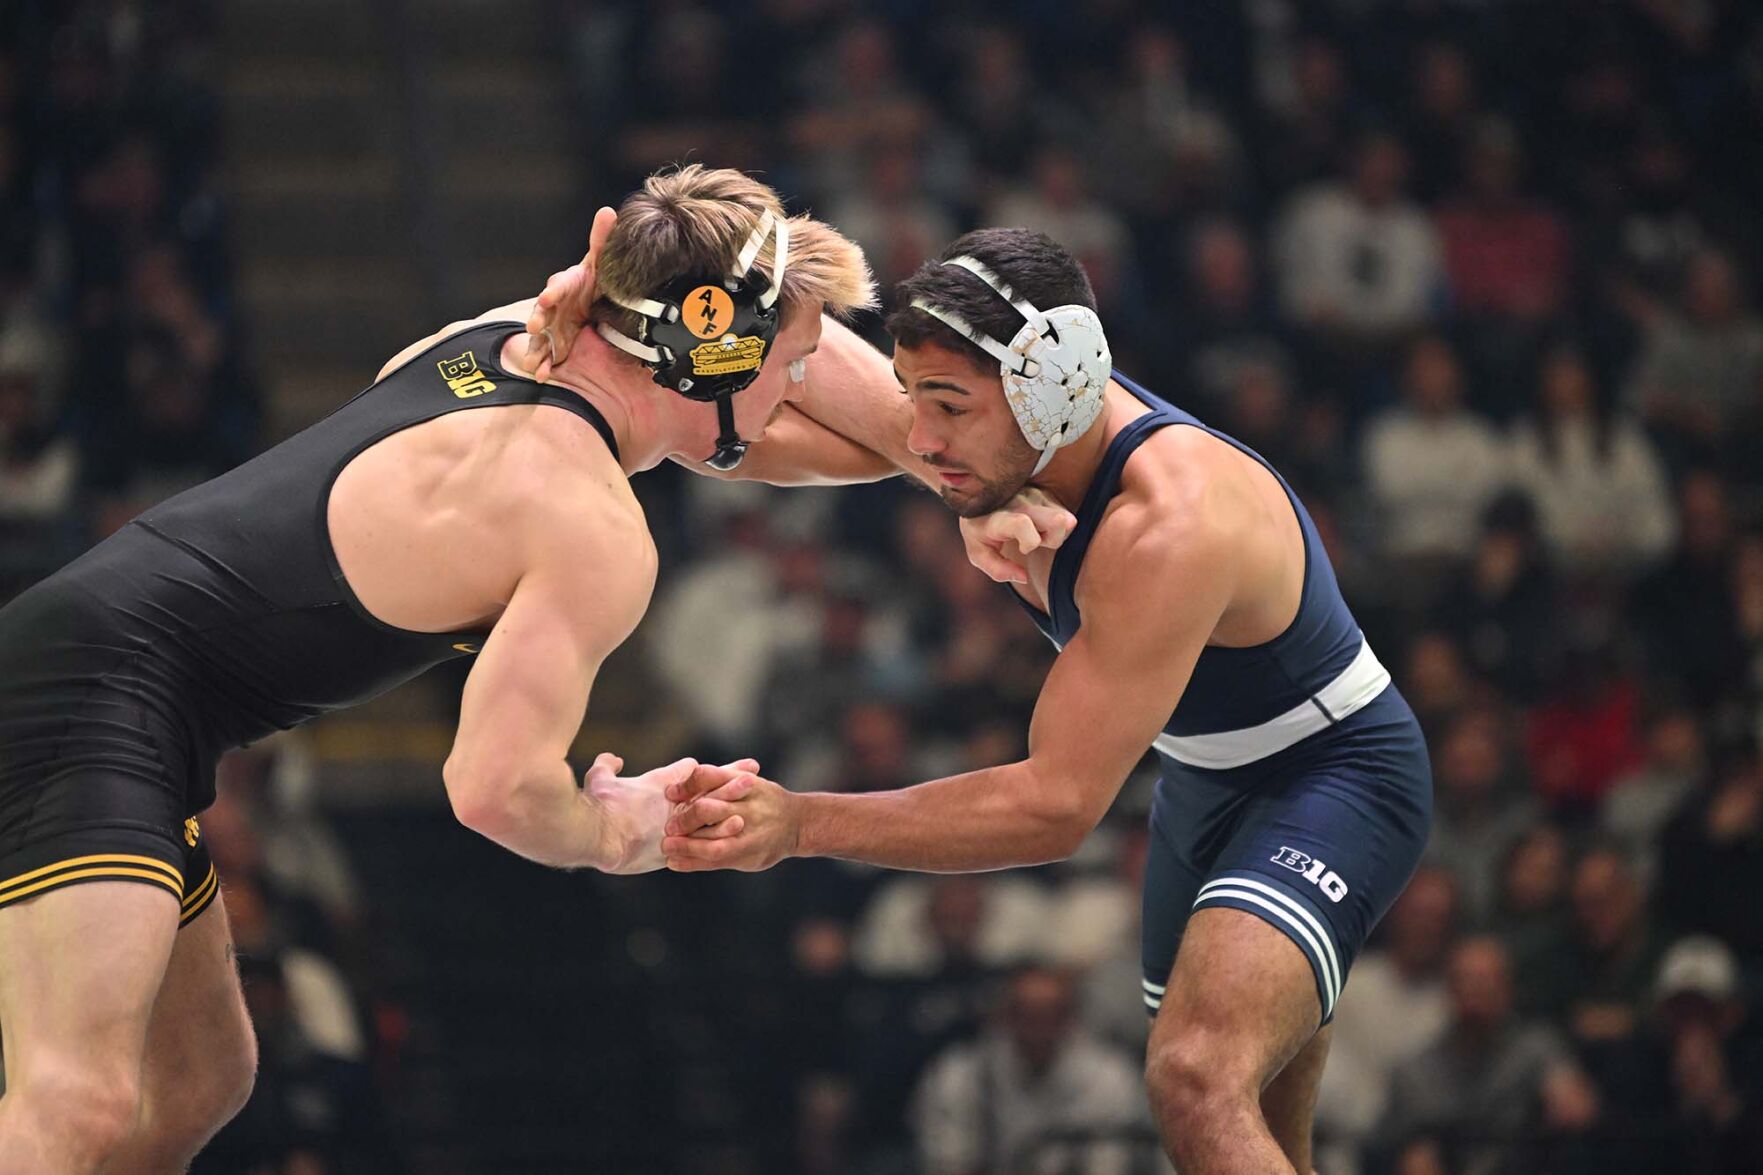 NCAA wrestling Iowas Murin advances to quarterfinals, will face three-time champion Sports tribdem picture image